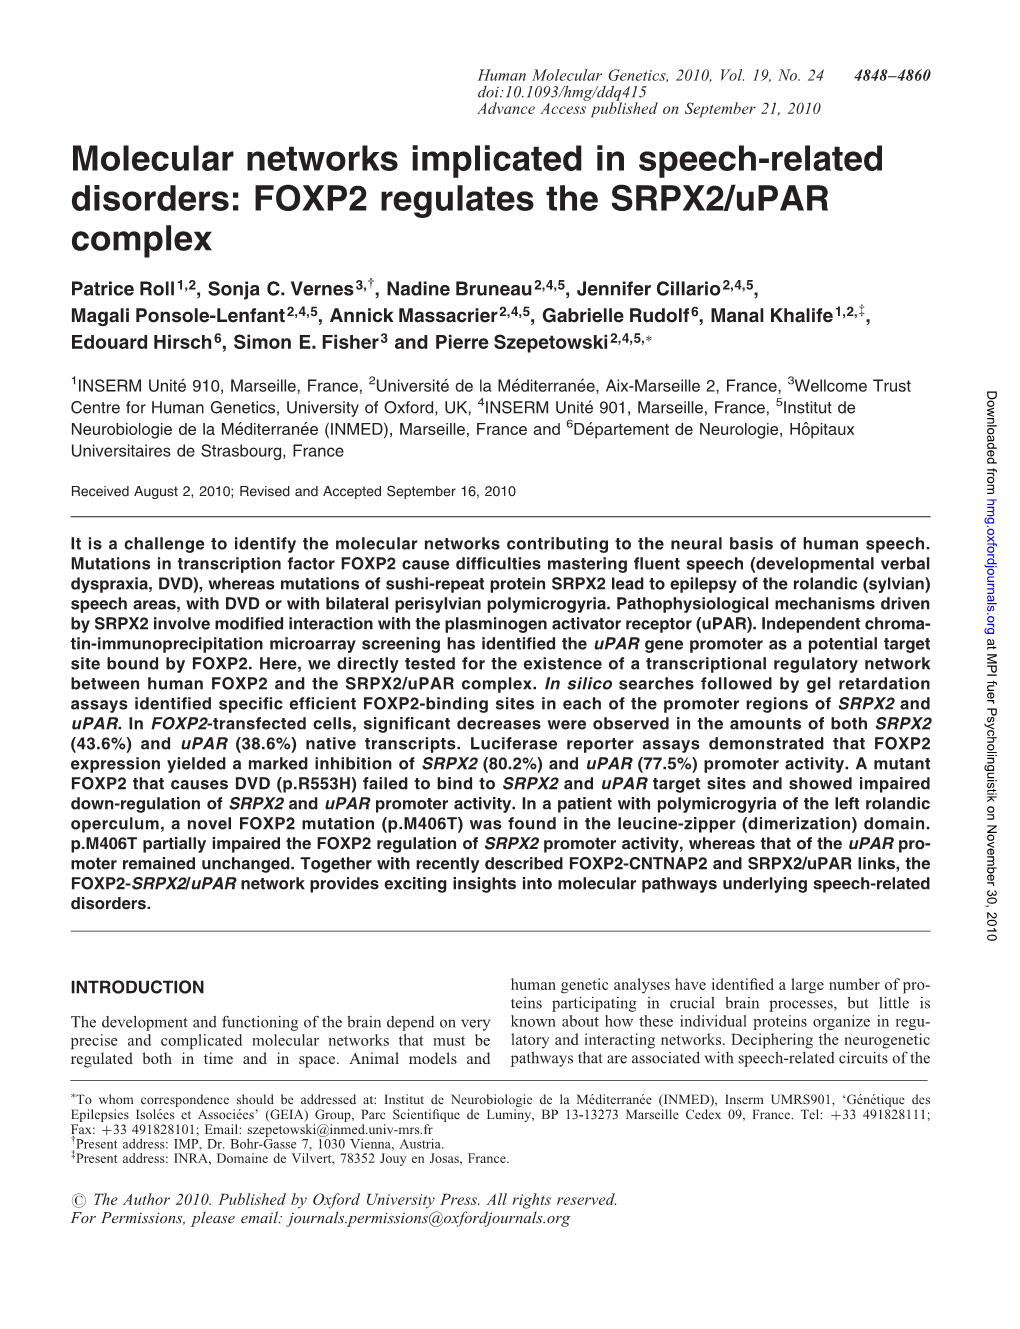 FOXP2 Regulates the SRPX2/Upar Complex